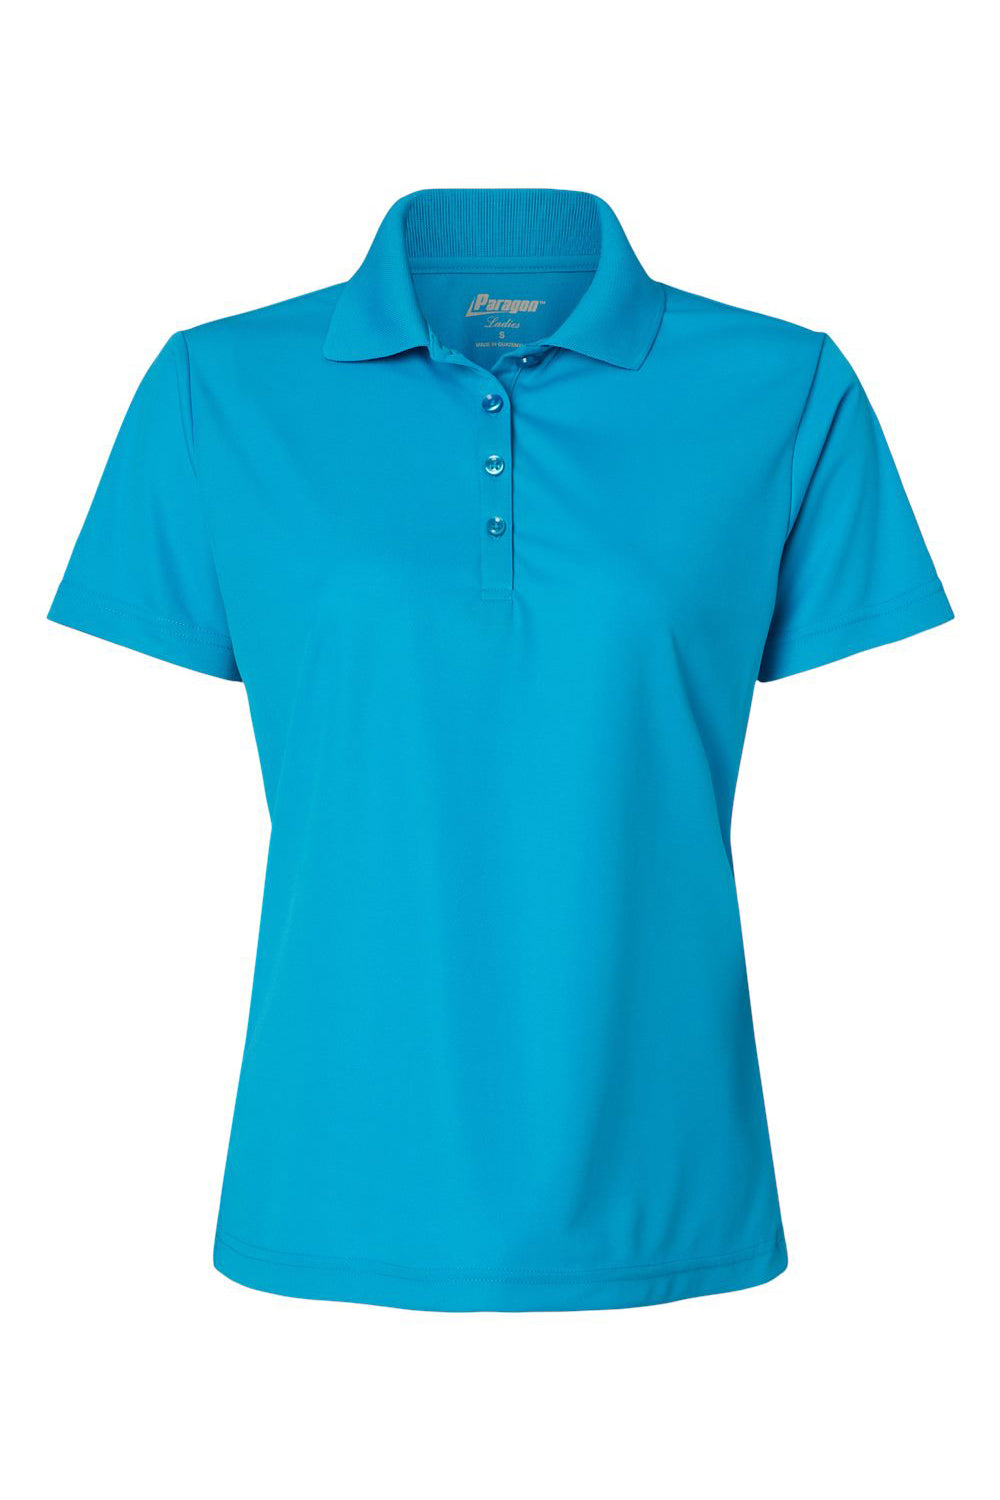 Paragon 504 Womens Sebring Performance Short Sleeve Polo Shirt Turquoise Blue Flat Front